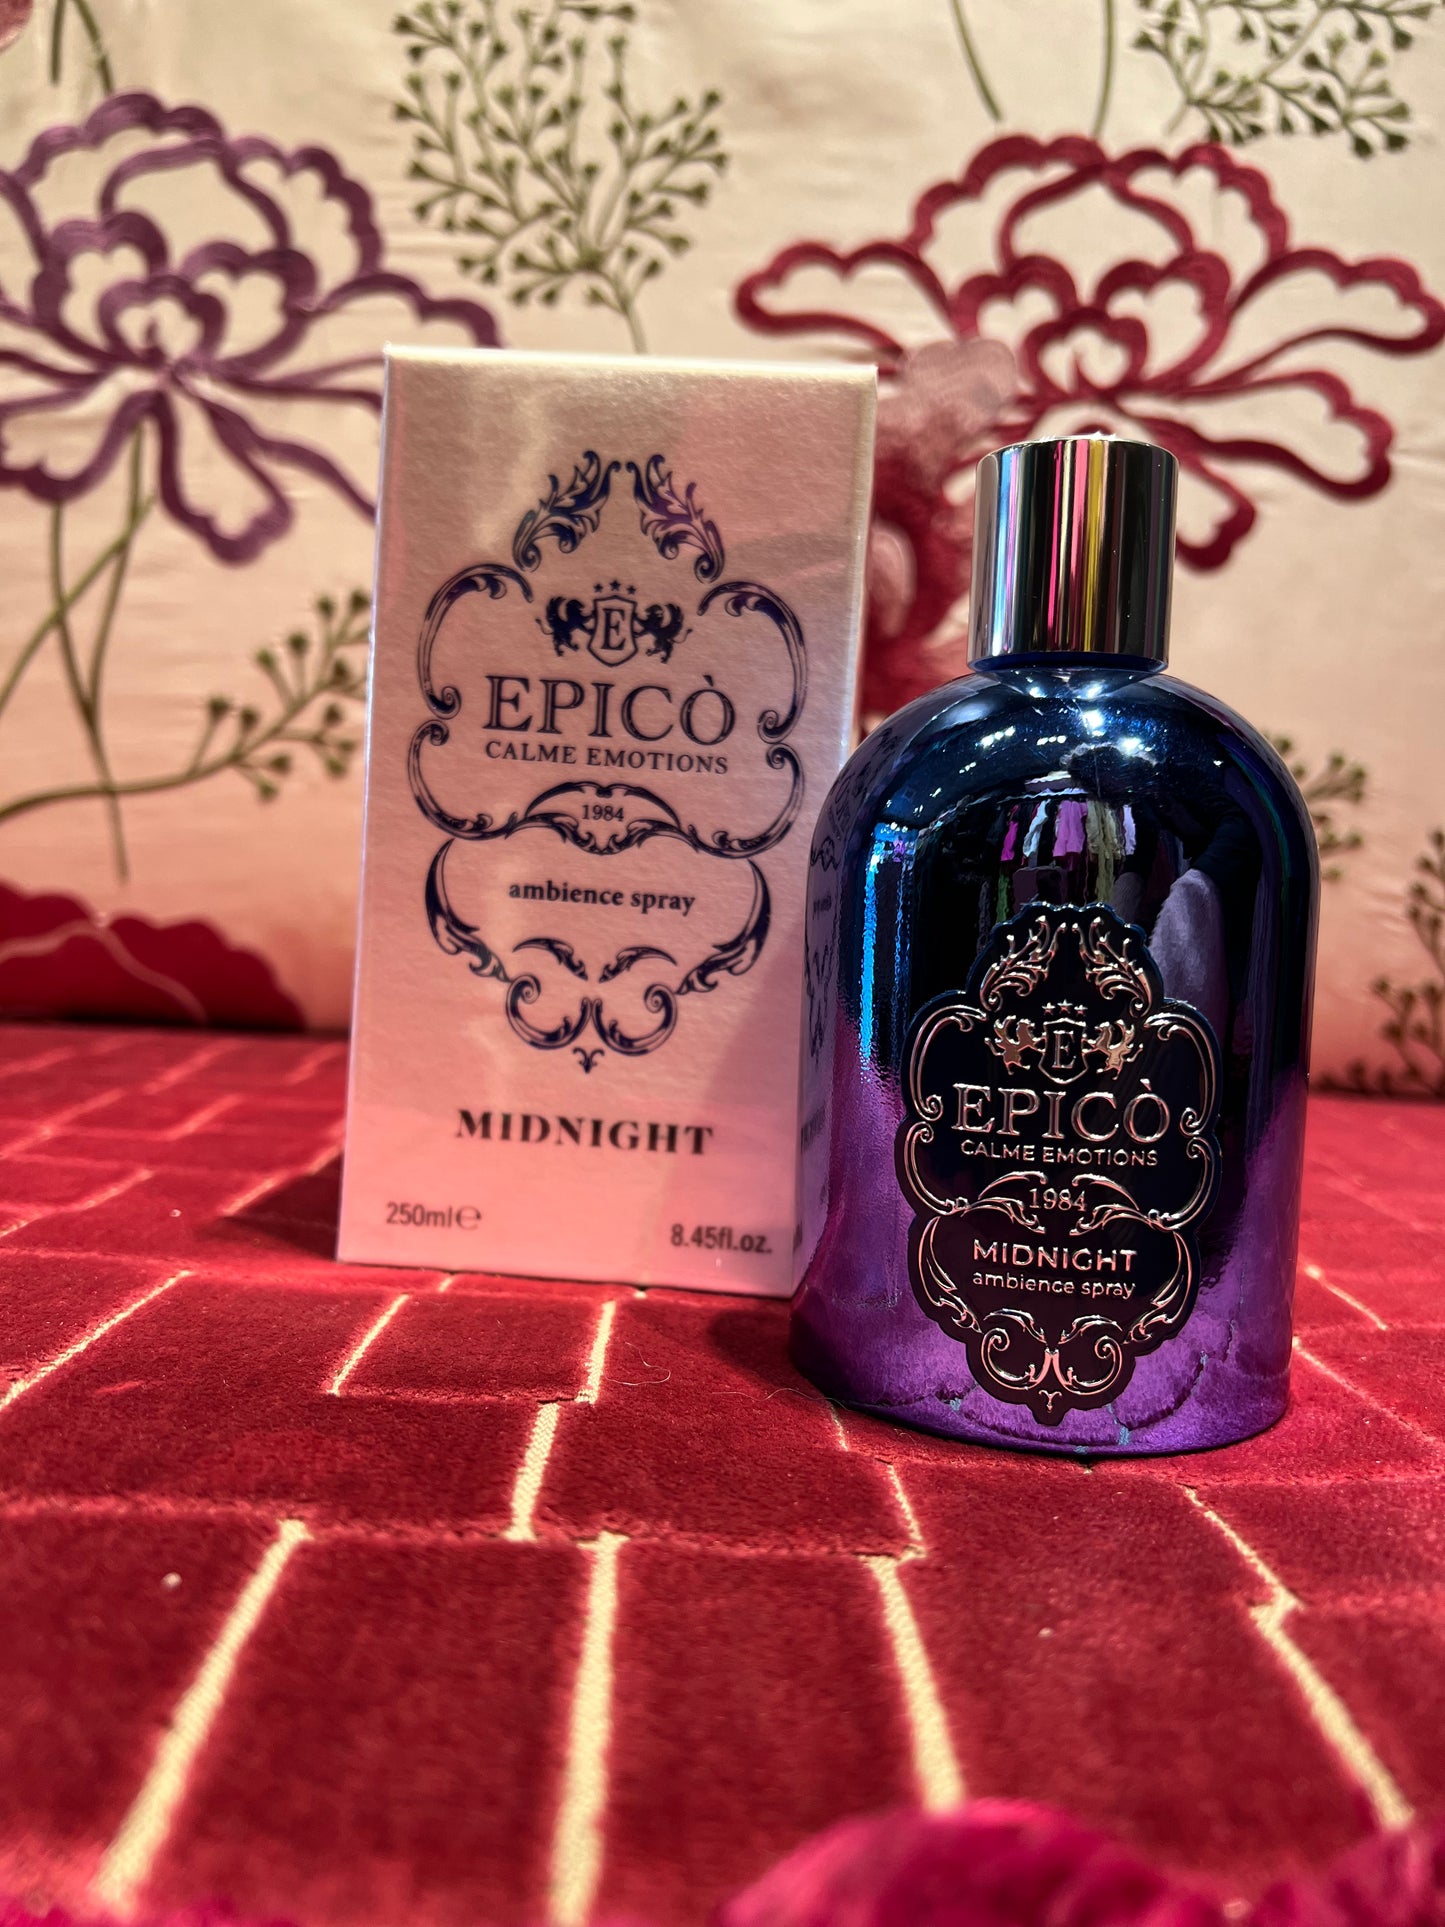 Epico’ Midnight ambience spray